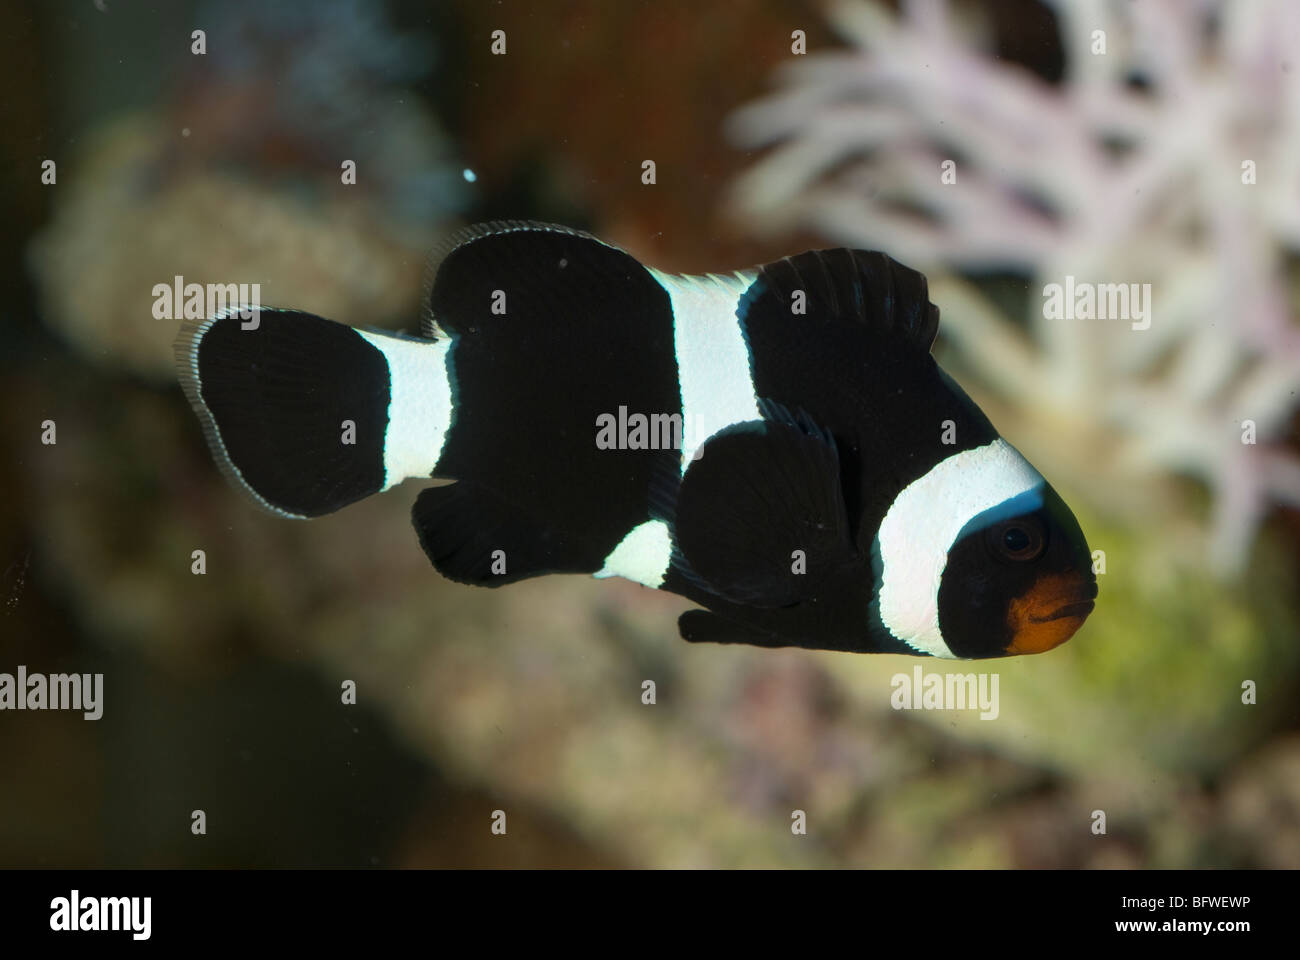 Clownfish Amphiprion percula "Black", Pomacentridae, born in aquarium Stock Photo